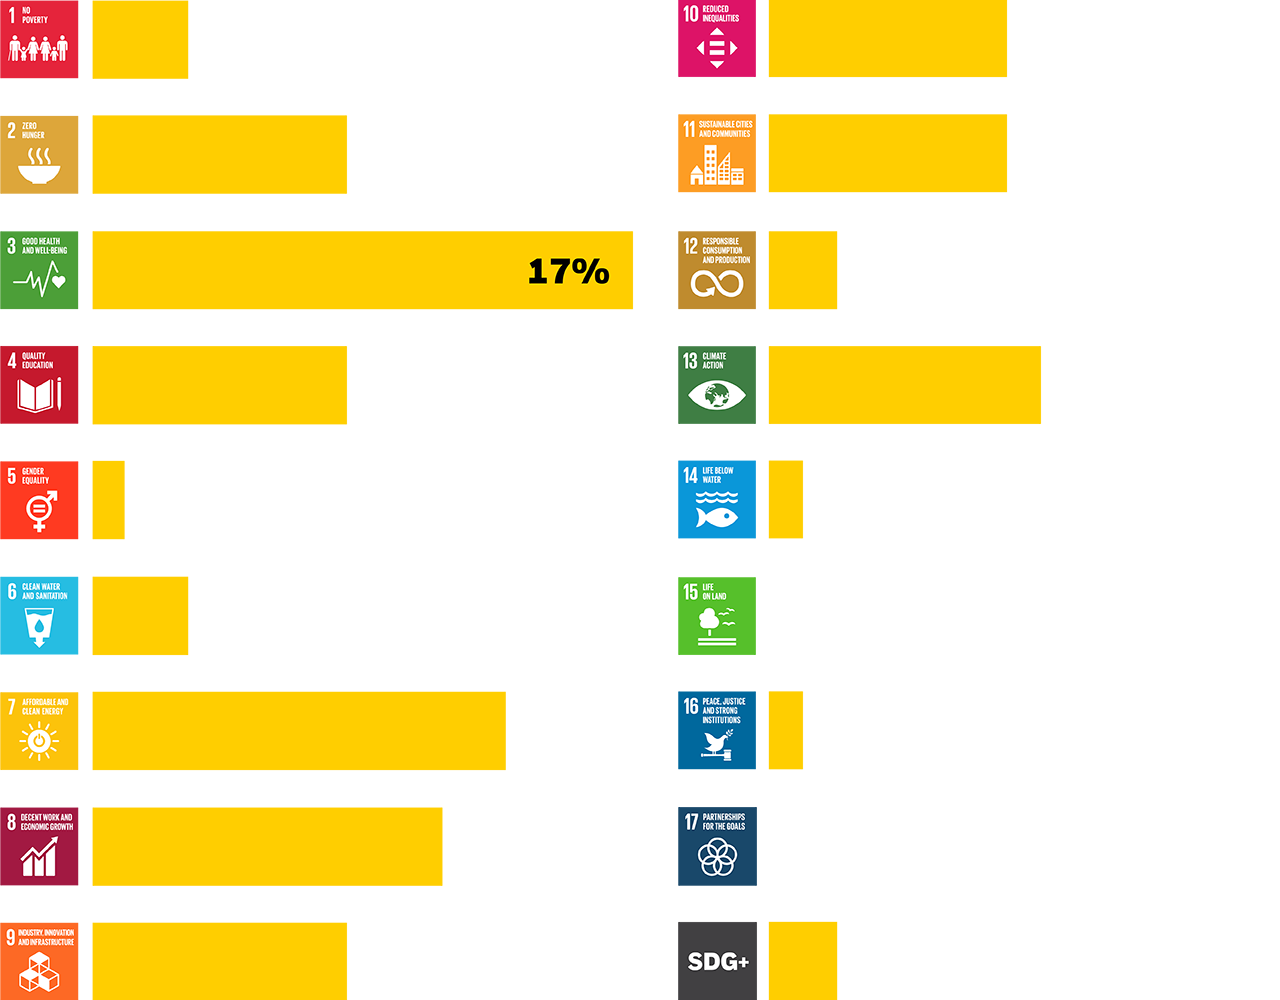 Distribution of strategy holdings across SDGs